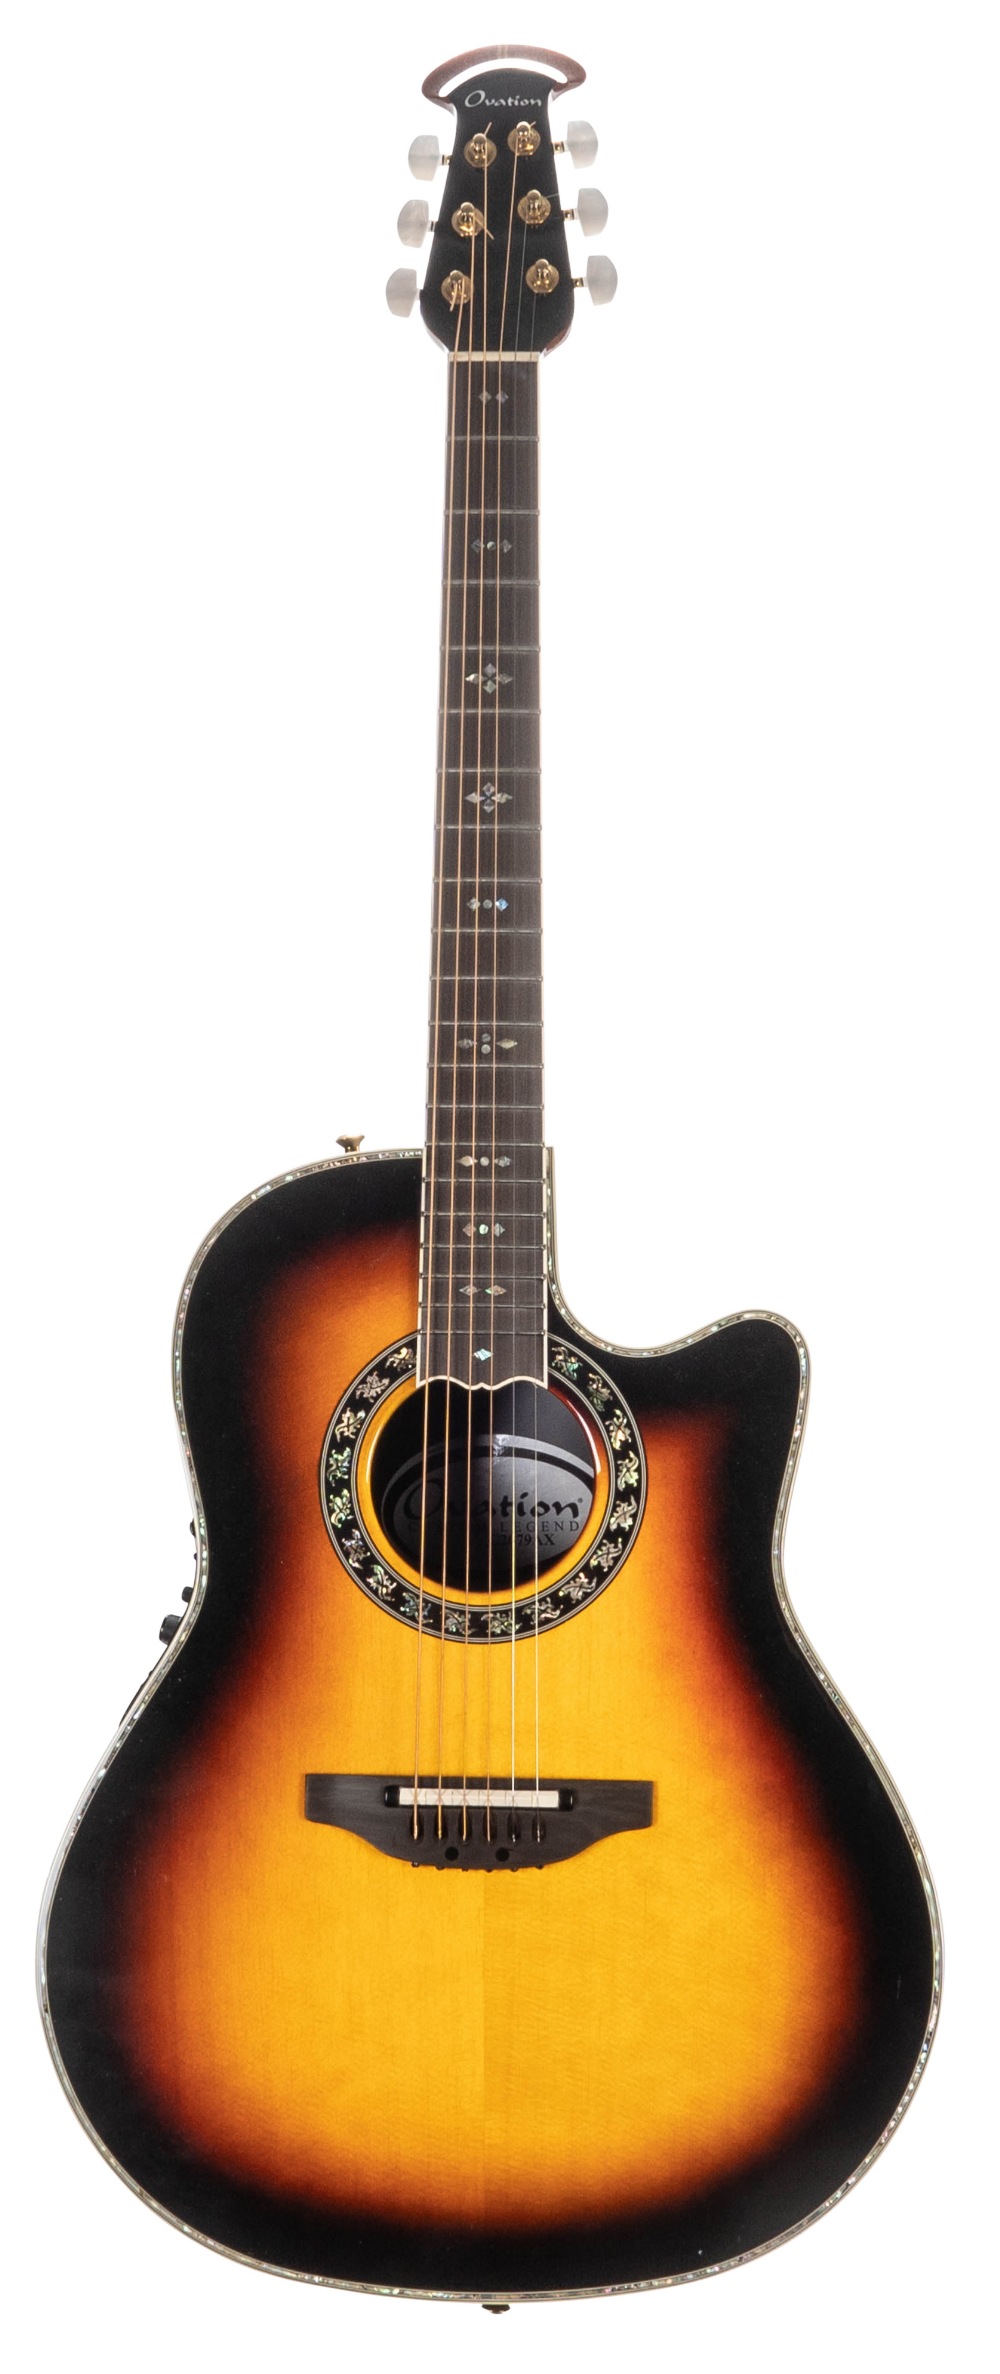 Ovation Custom Legend C2079AX electro-acoustic guitar, made in Korea, ser. no. K16xxxx59; Finish: